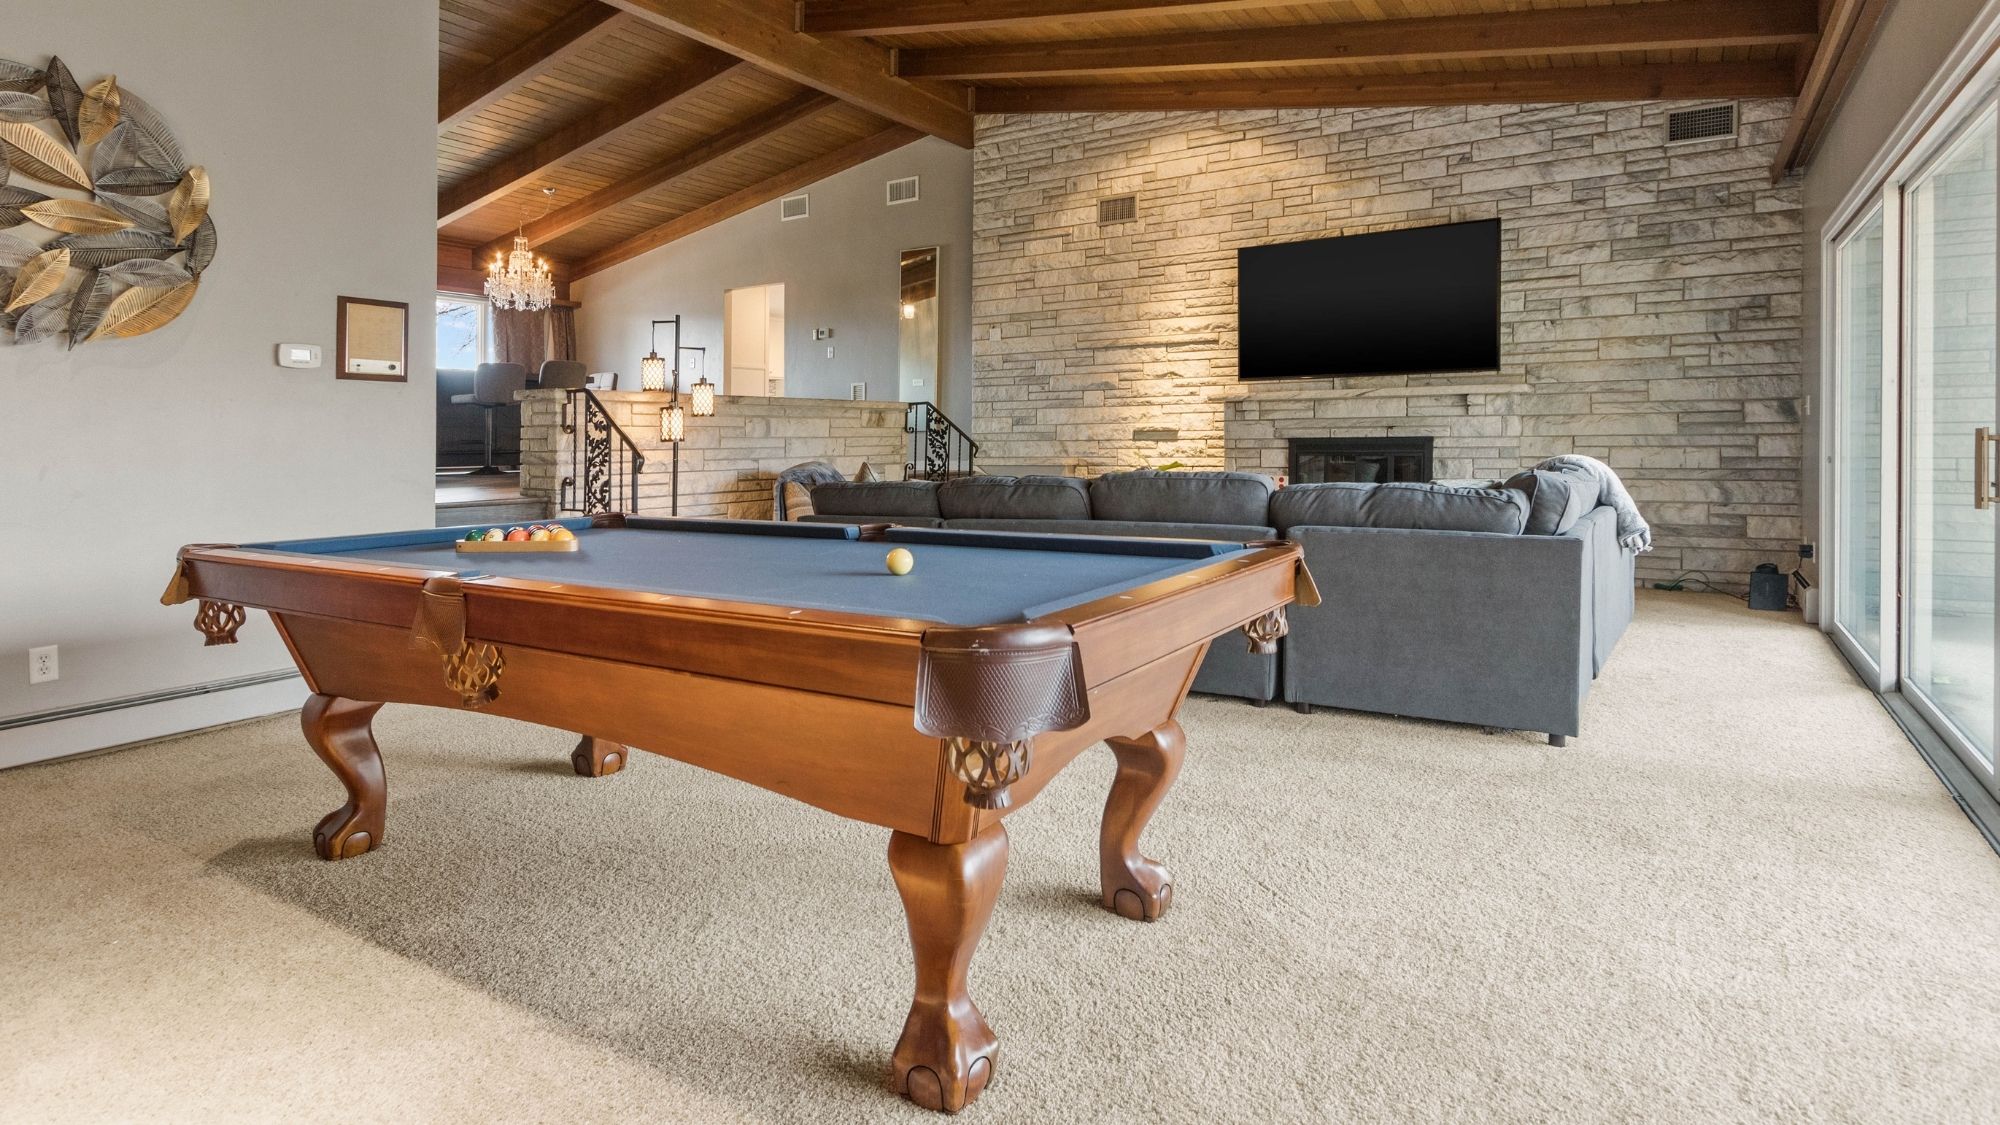 Preble Hills Living Room and Pool Table 2